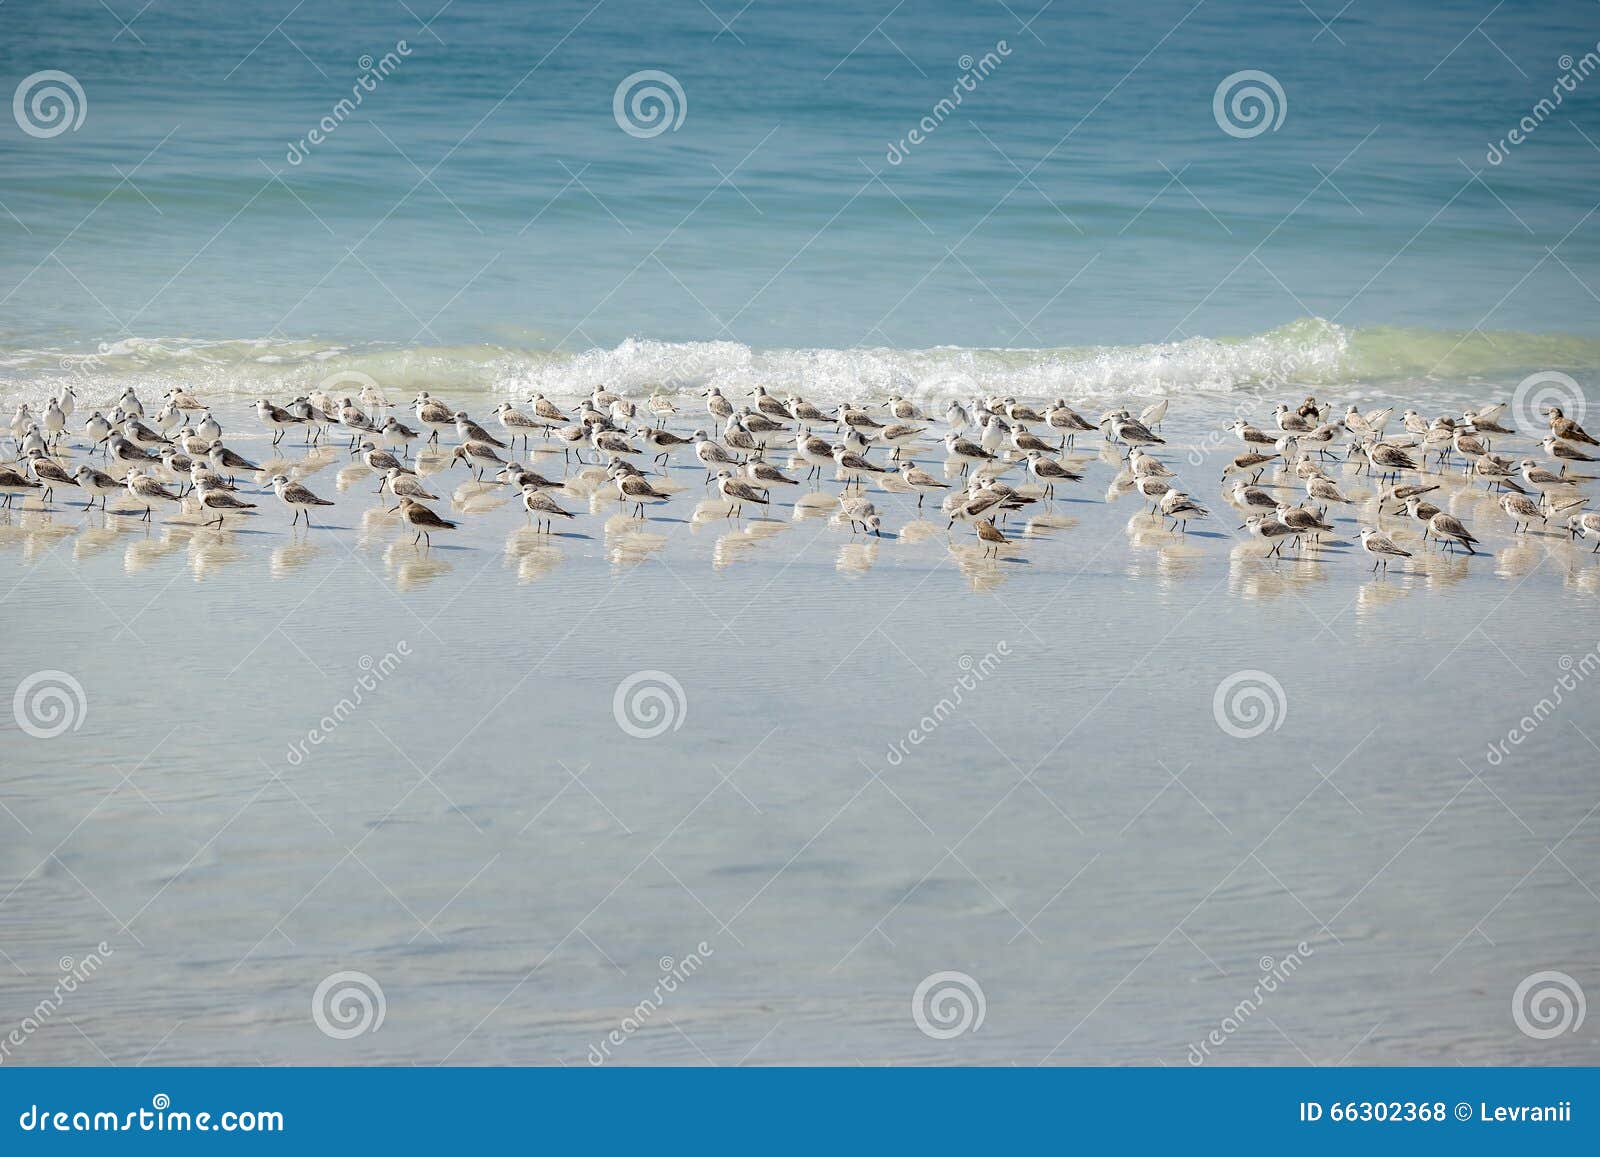 sandpiper flock at a winter siesta key beach in florida